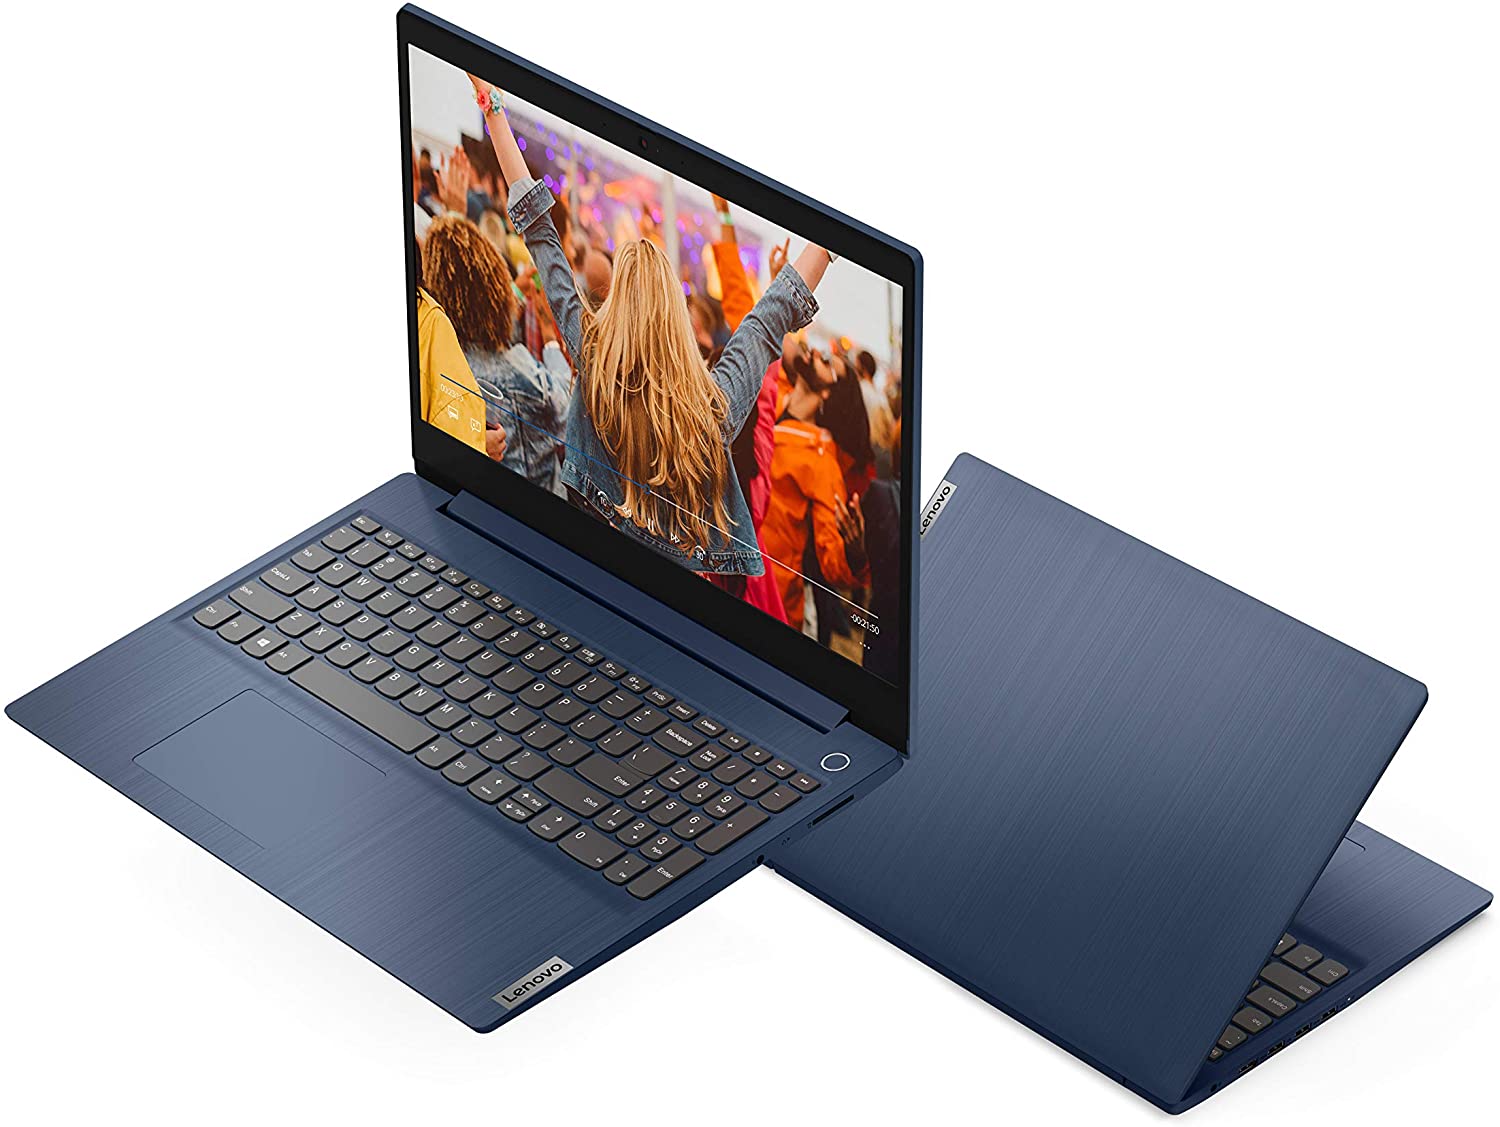  Lenovo IdeaPad 3 15.6" Laptop Intel Core i3-1005G1 8GB RAM 256GB SSD Windows 10 in S Mode Blue, 4-10.99 Inches